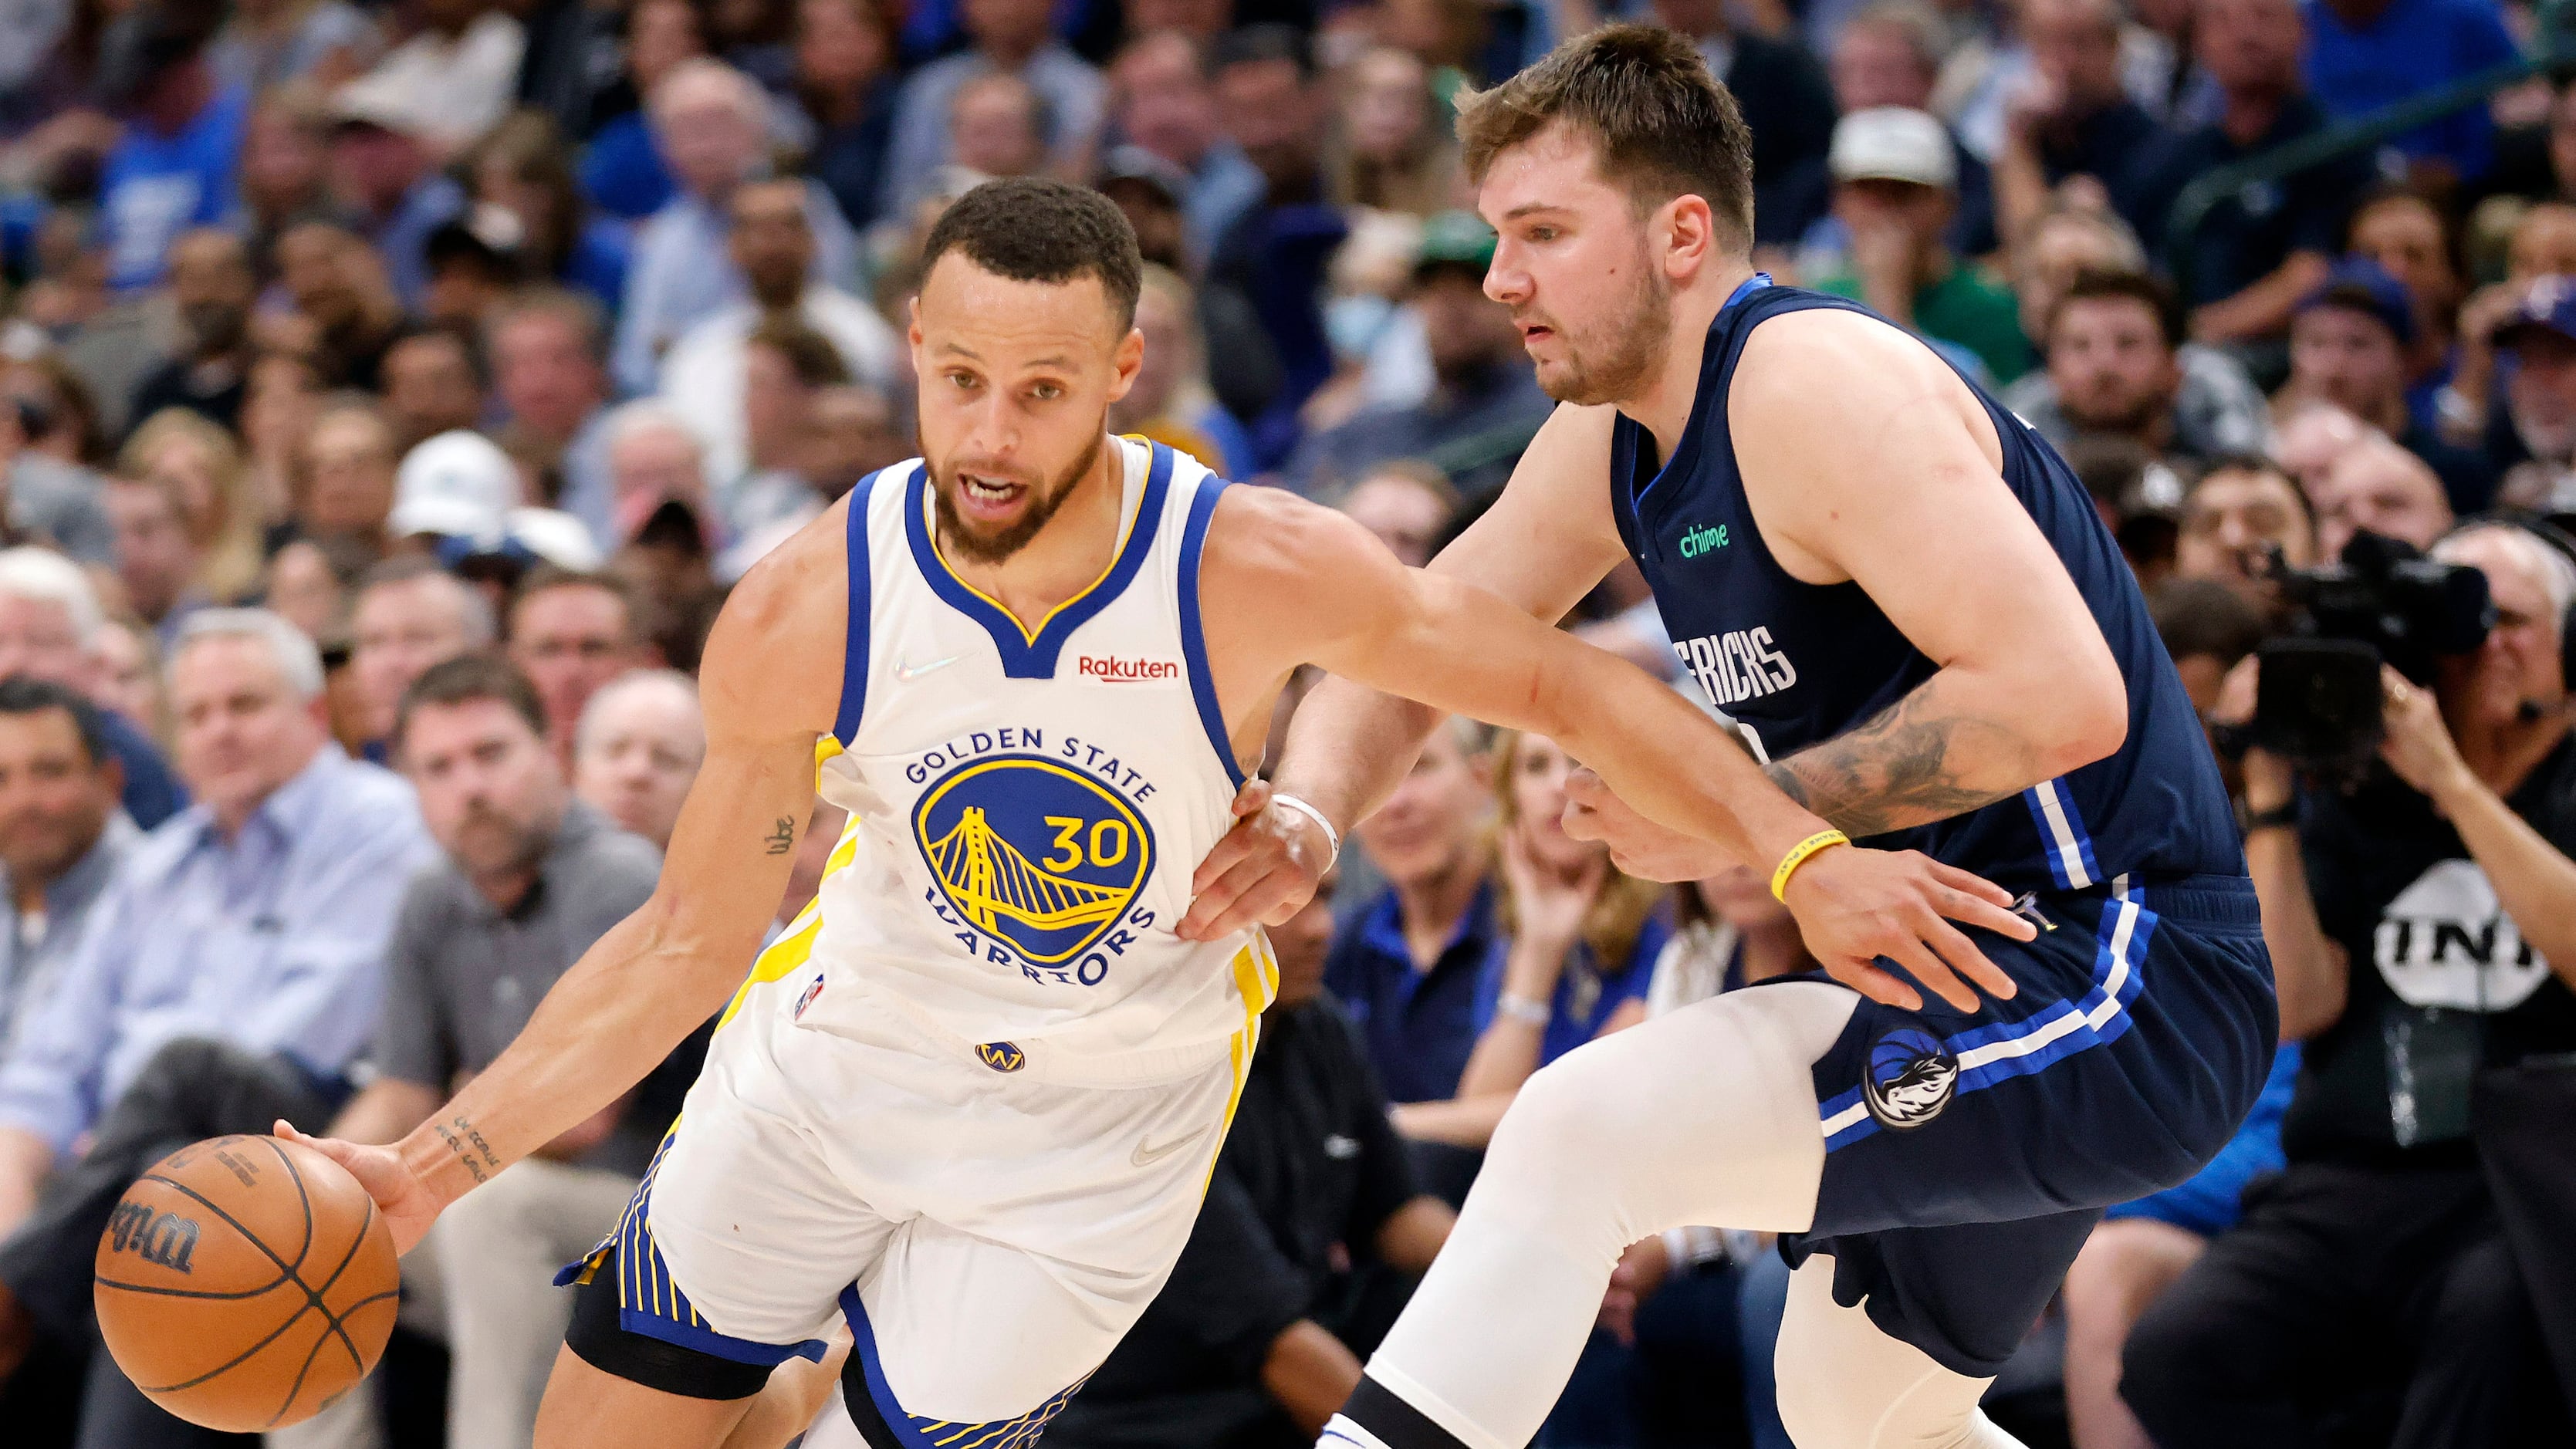 Stephen Curry vs LeBron James: Comparing NBA Finals stars - Sports